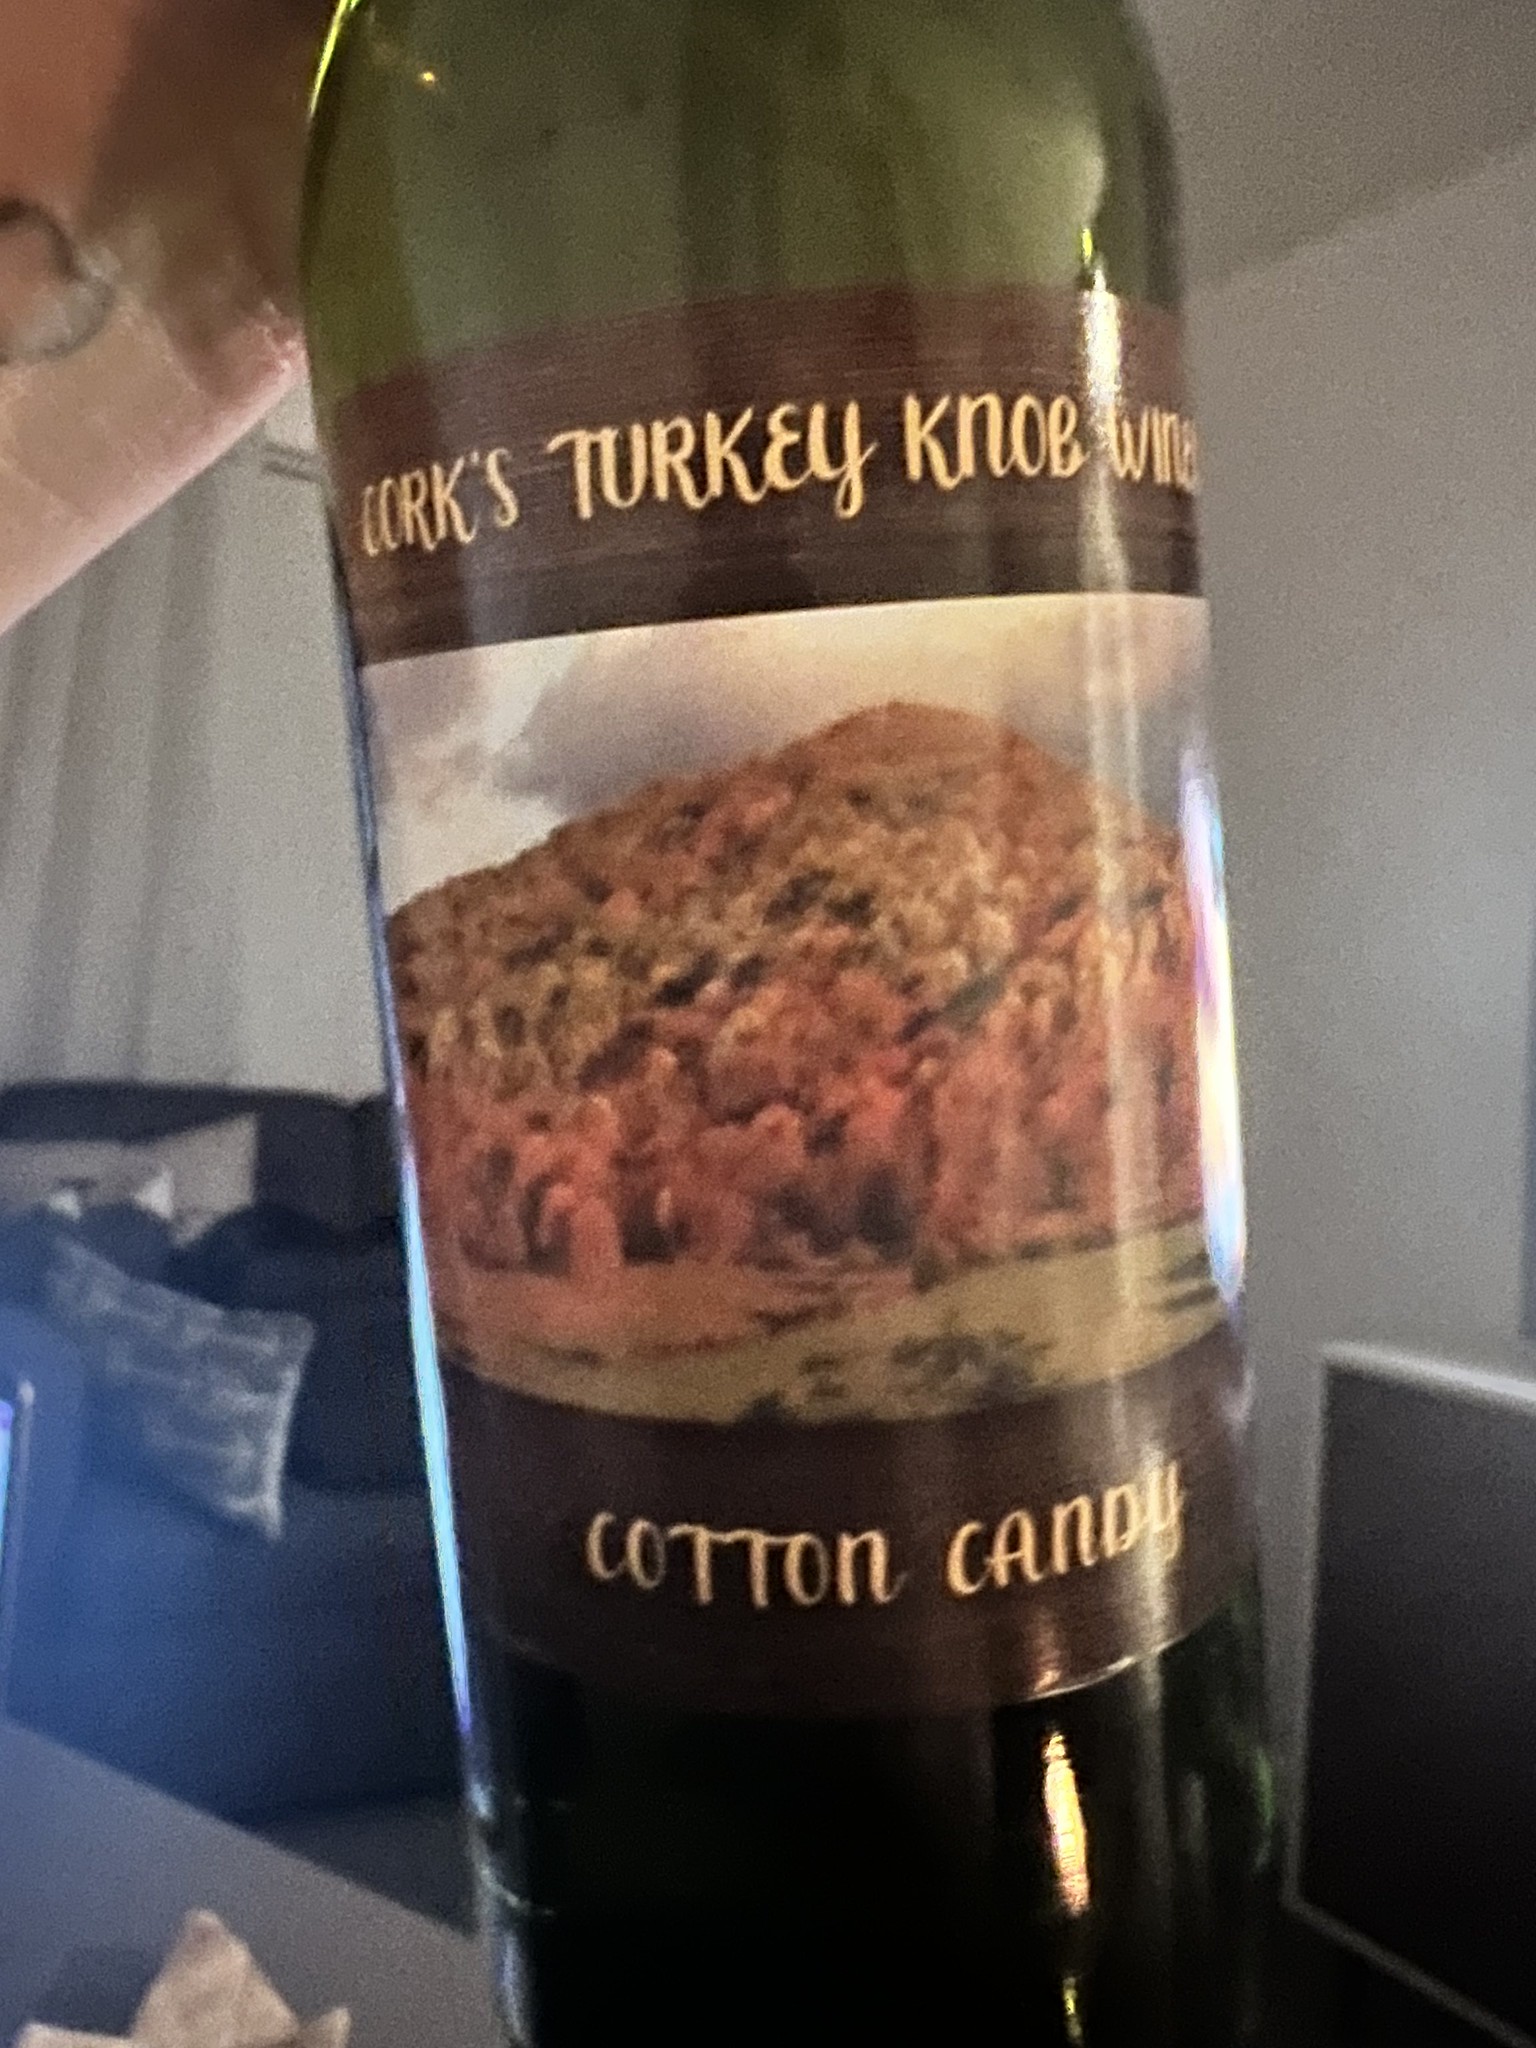 Cork Turkey Knob Wines